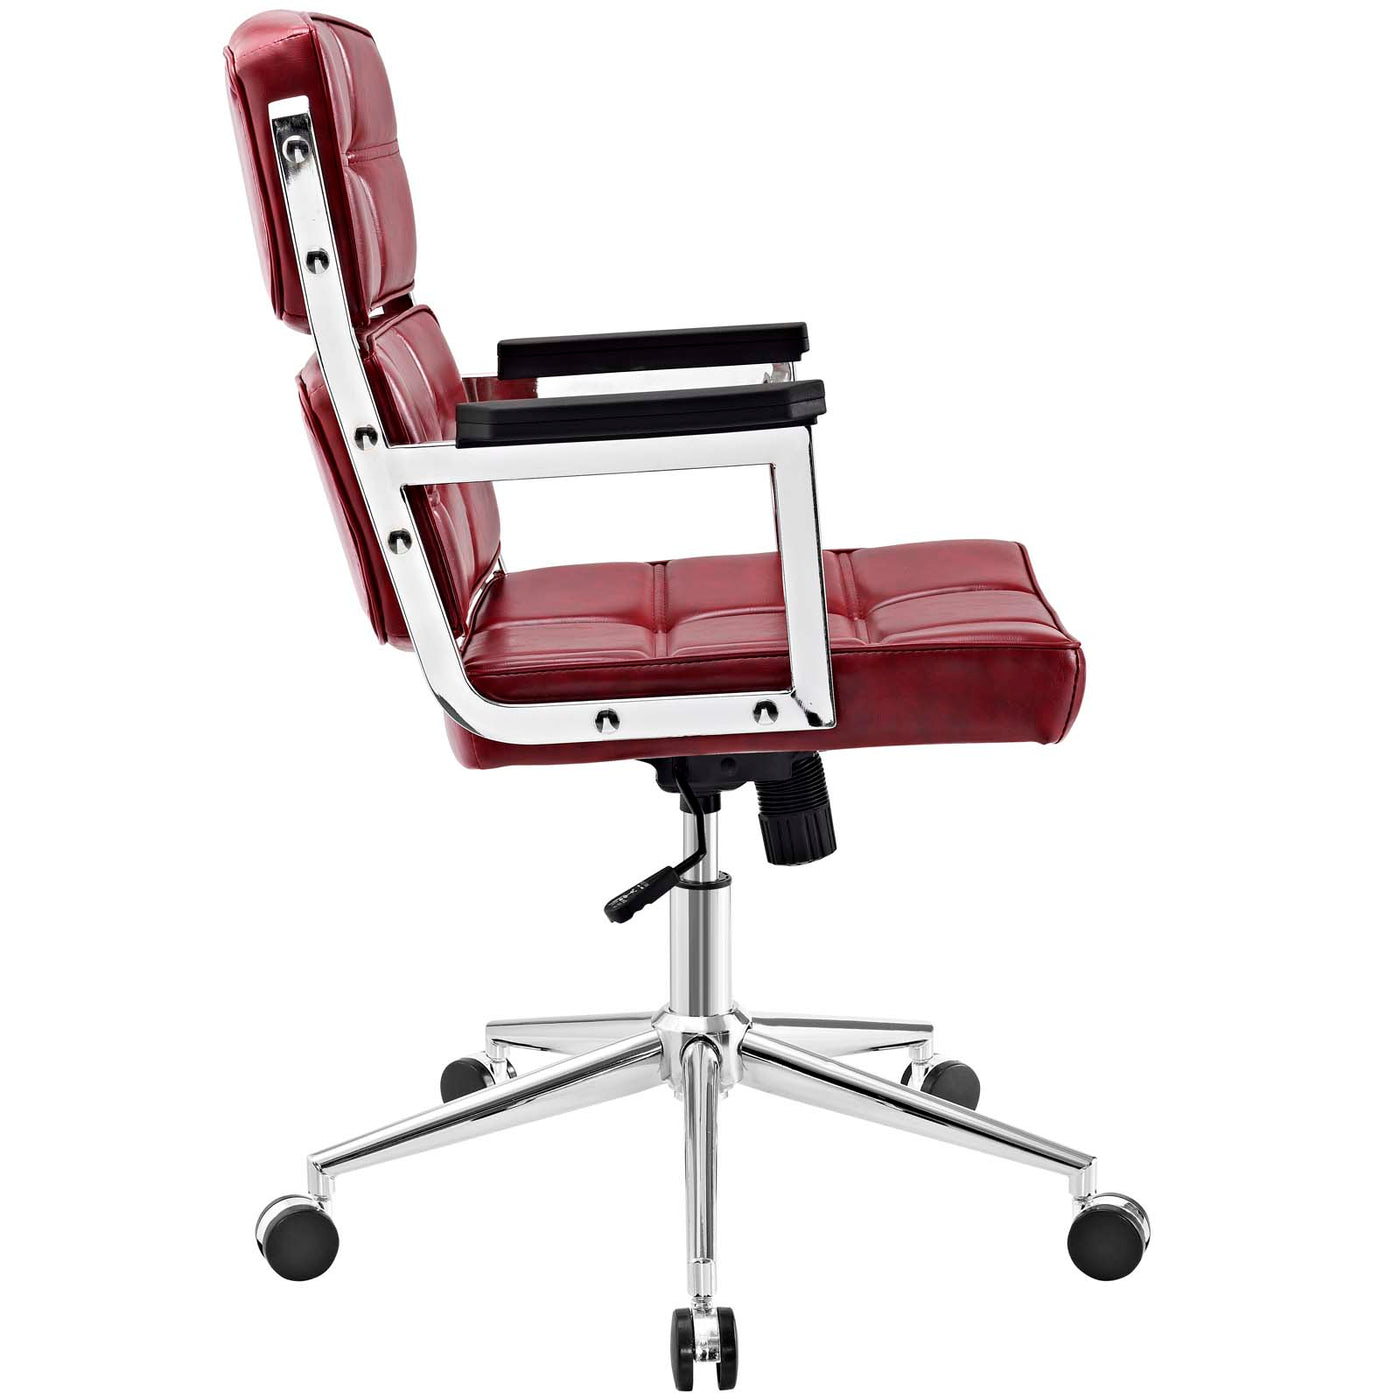 Portray Highback Upholstered Vinyl Office Chair